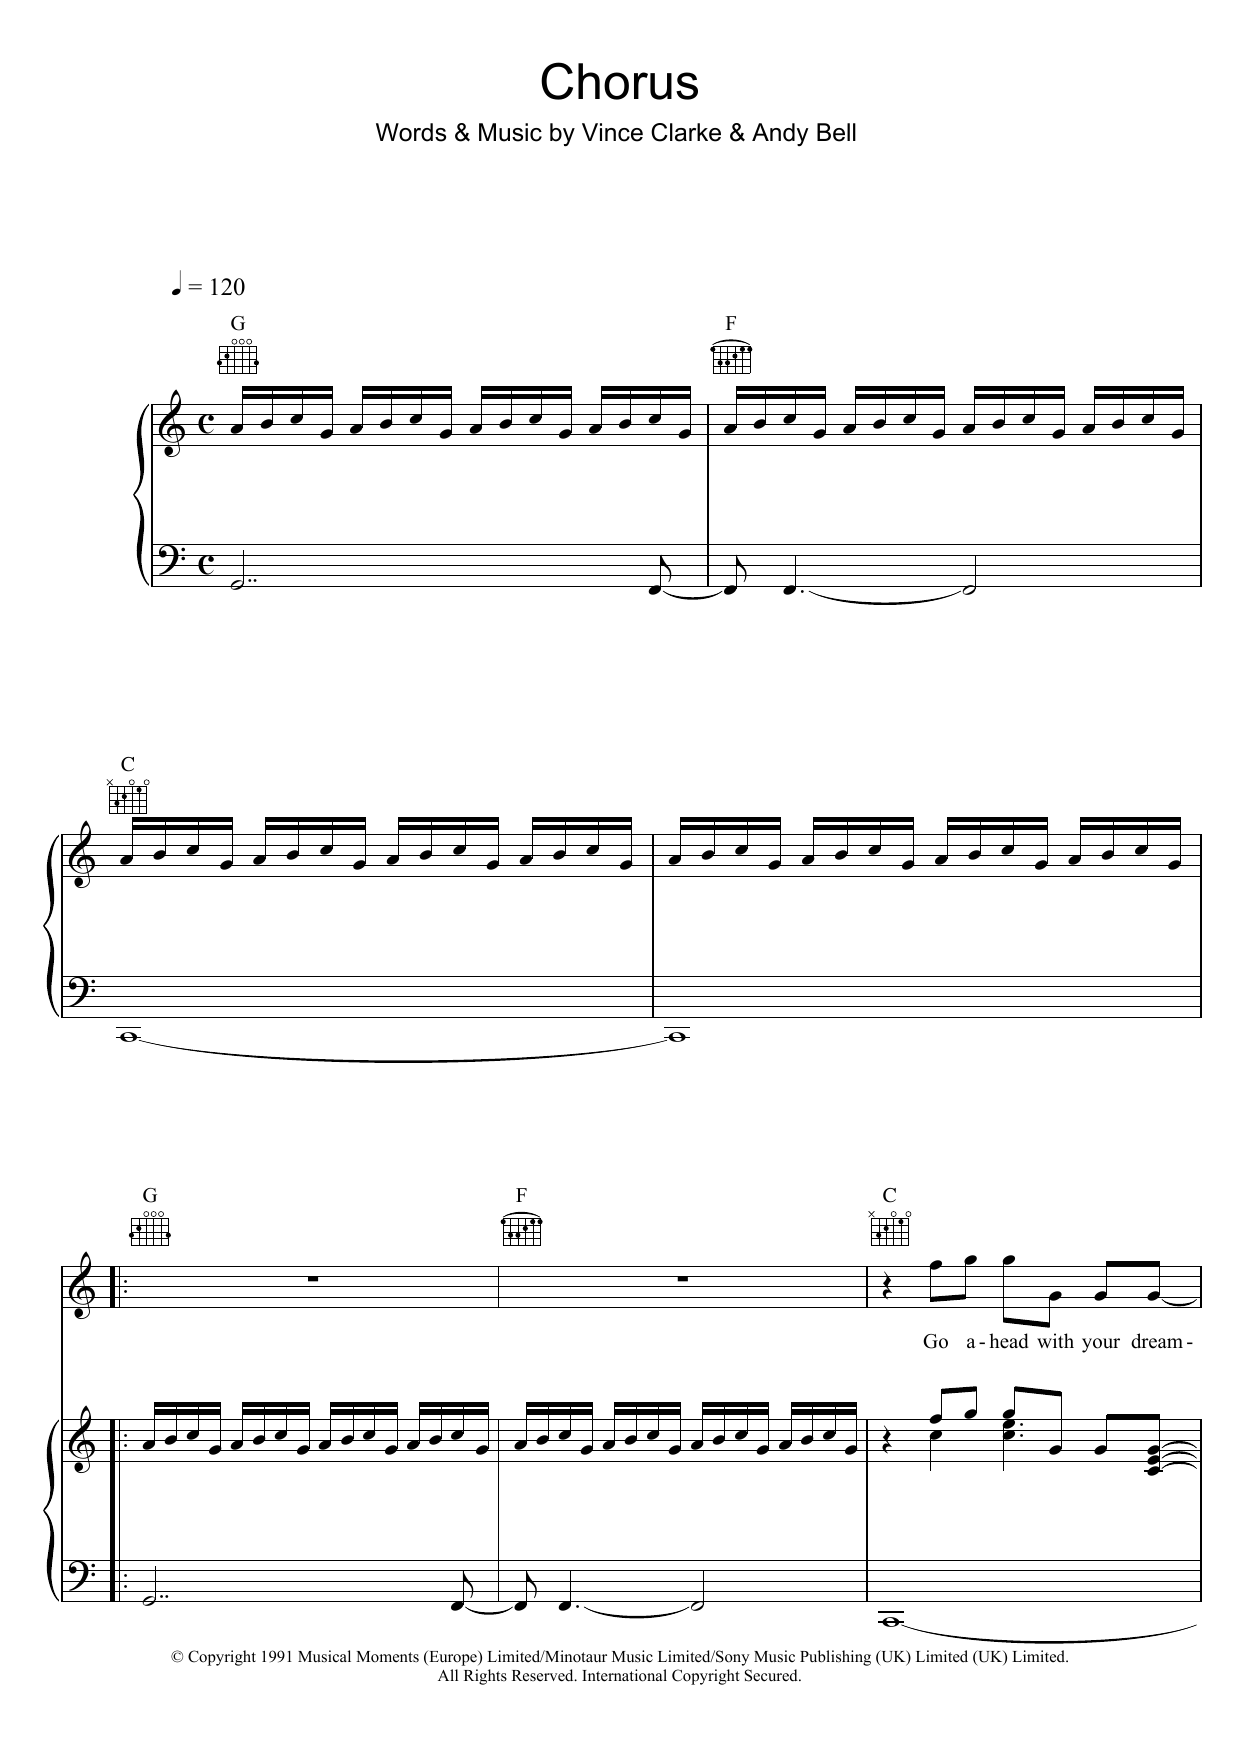 Erasure Chorus Sheet Music Notes & Chords for Piano, Vocal & Guitar (Right-Hand Melody) - Download or Print PDF